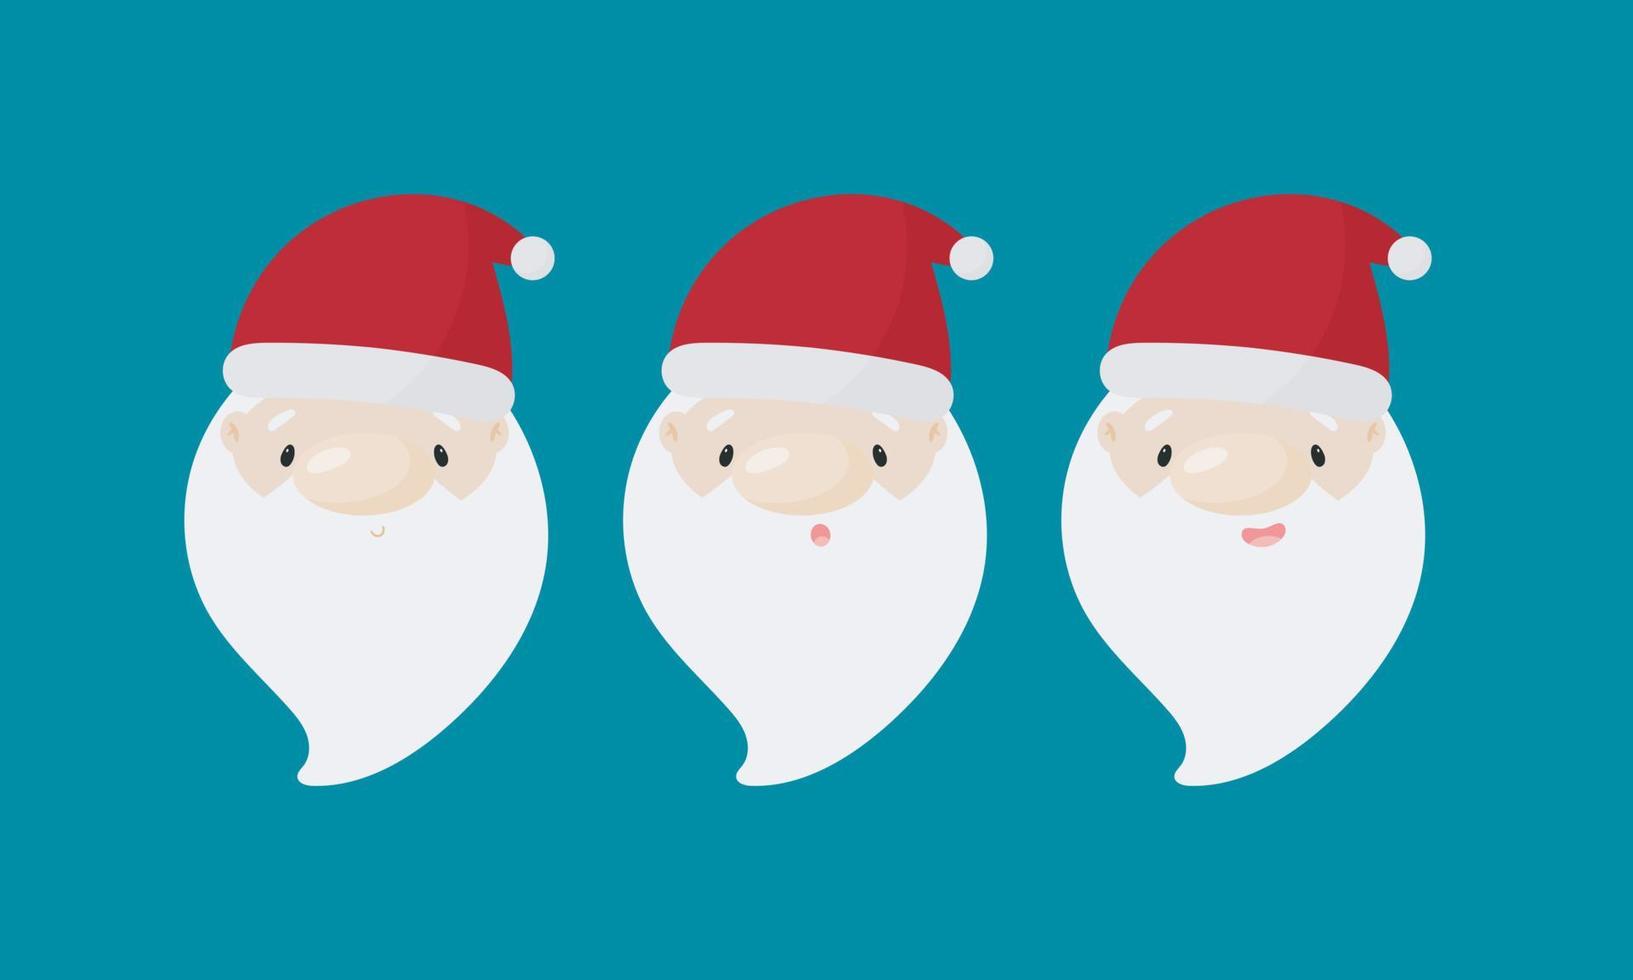 Santa Claus heads. Vector illustration in cartoon style.